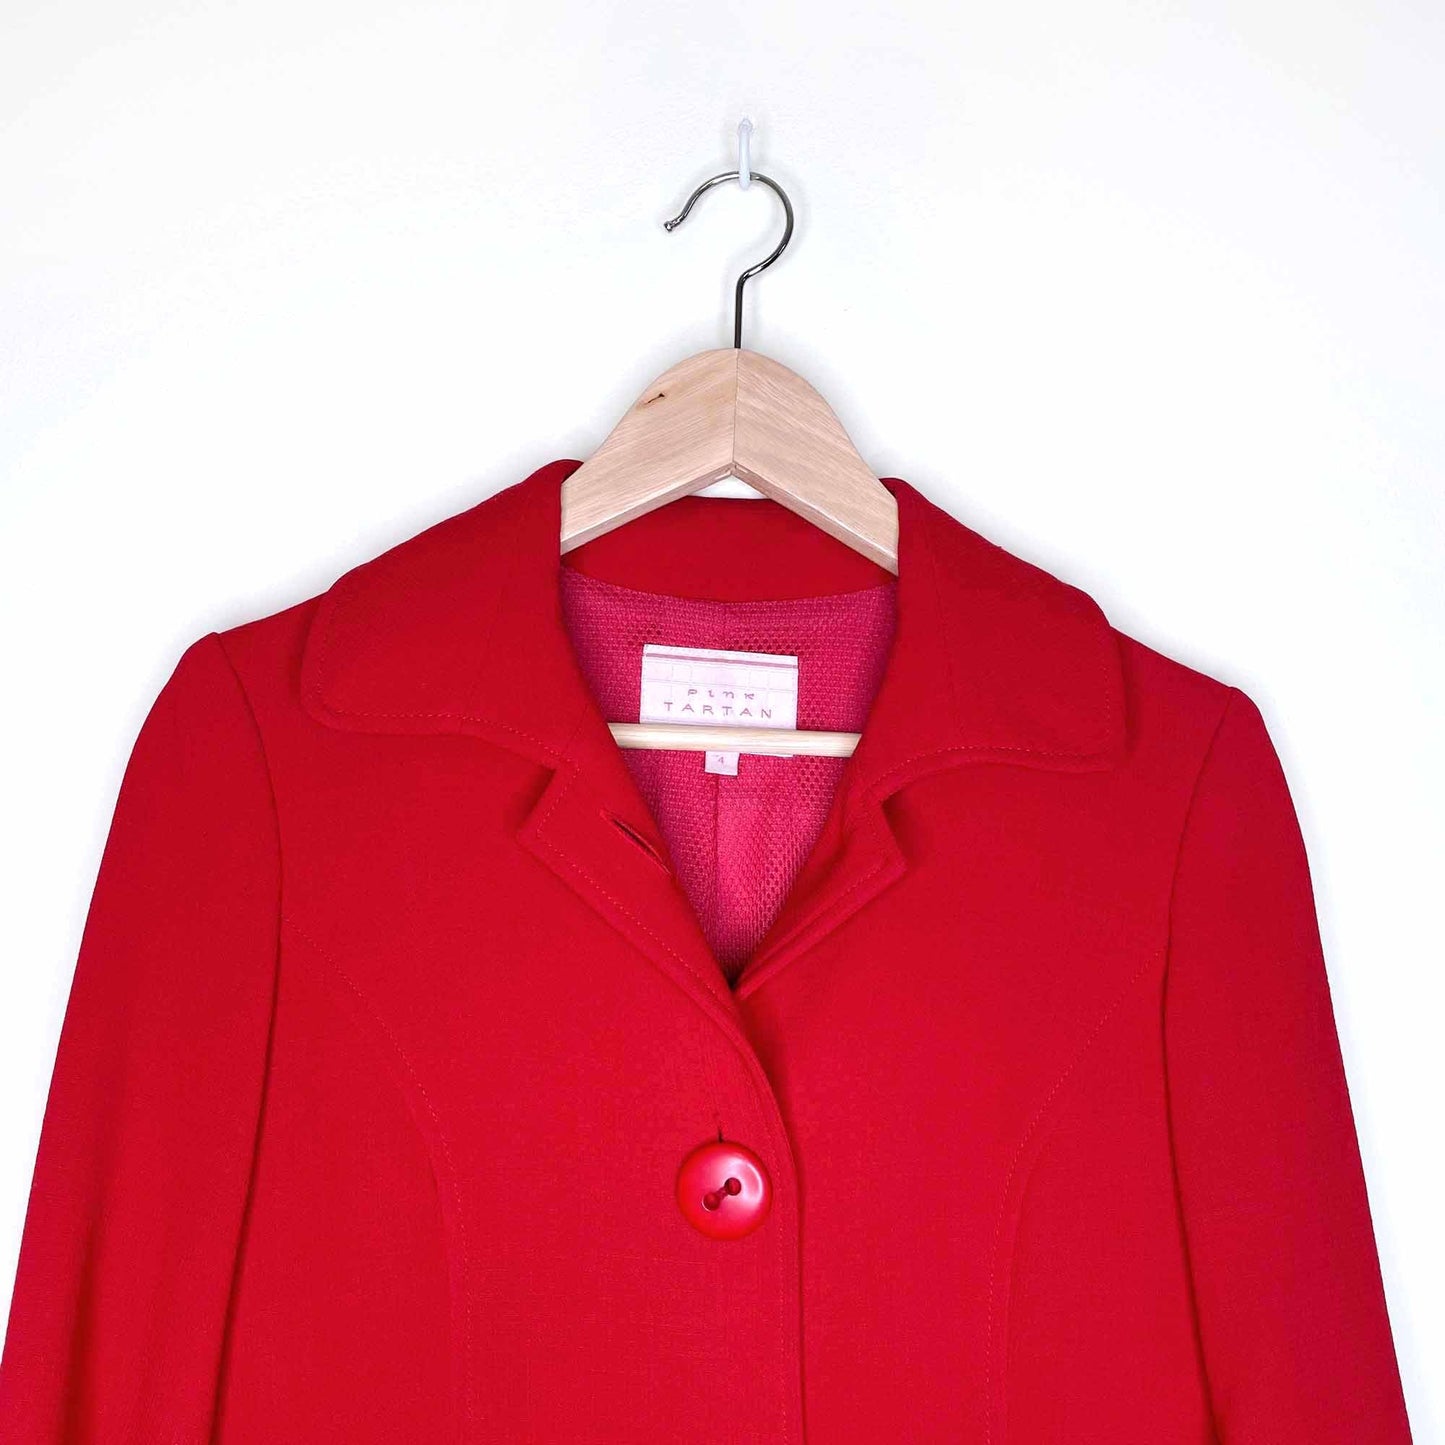 pink tartan 100% wool red jacket with mesh lining - size 4